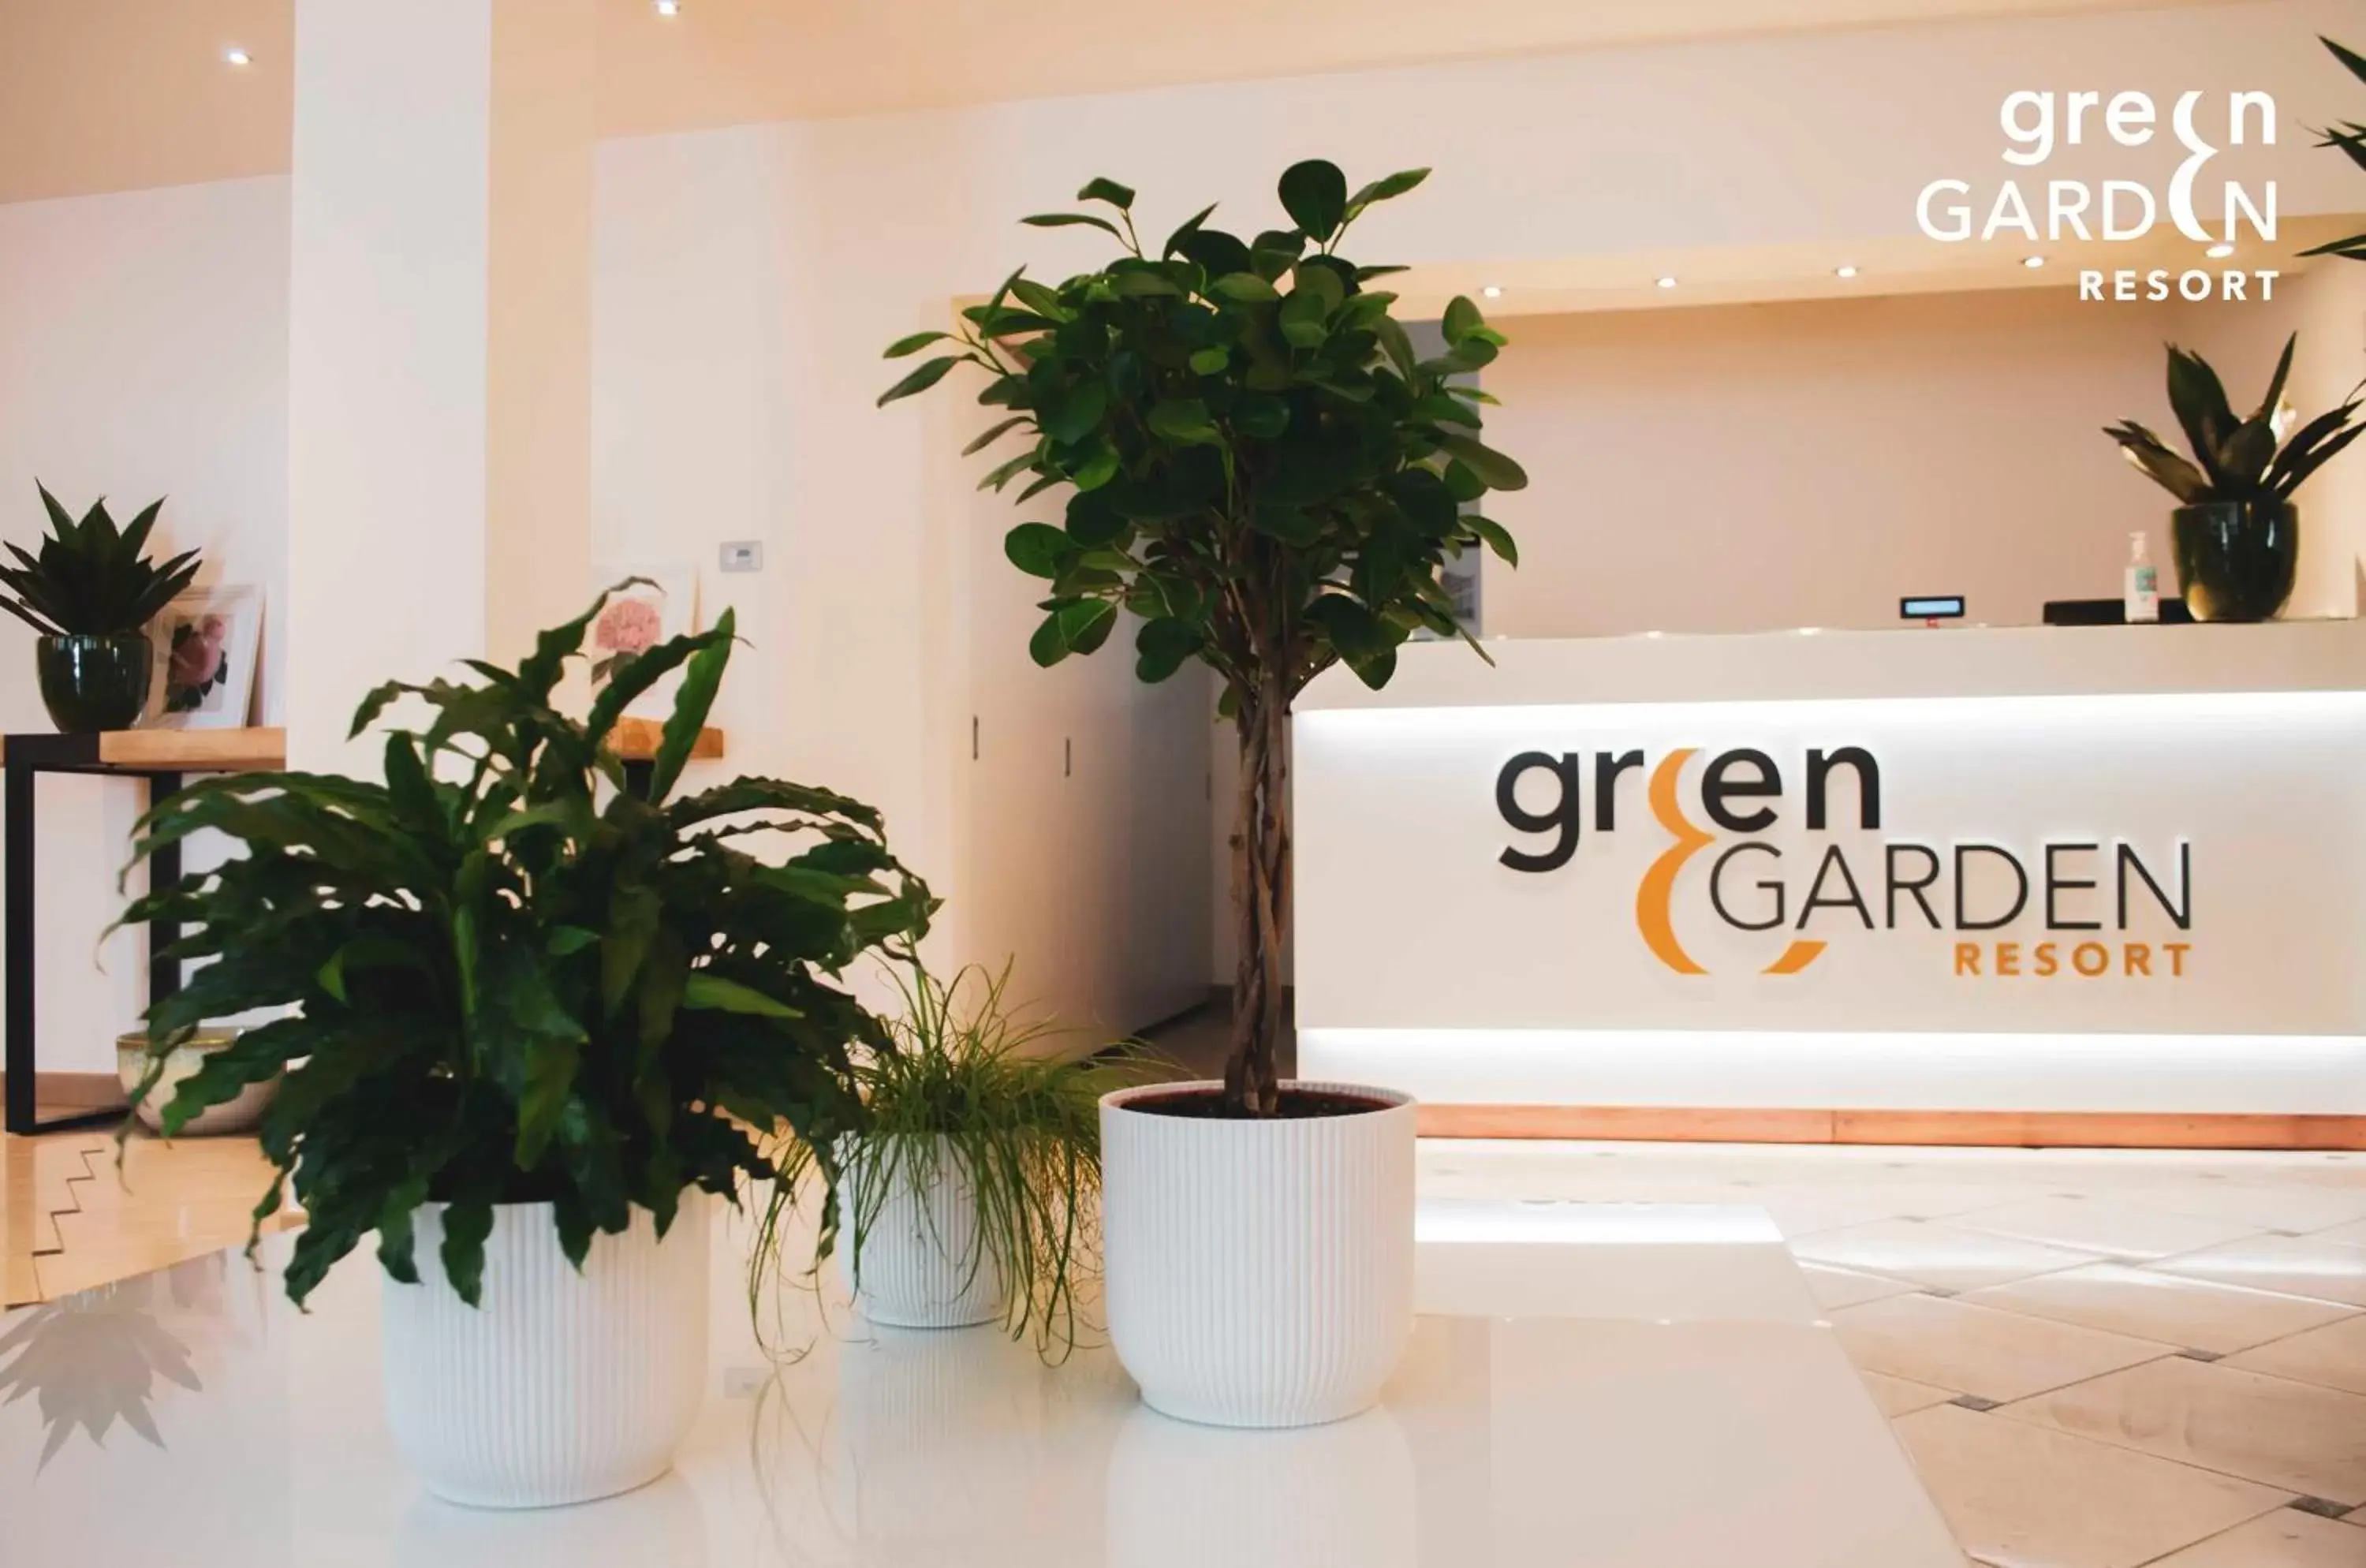 Property logo or sign in GREEN GARDEN Resort - Smart Hotel